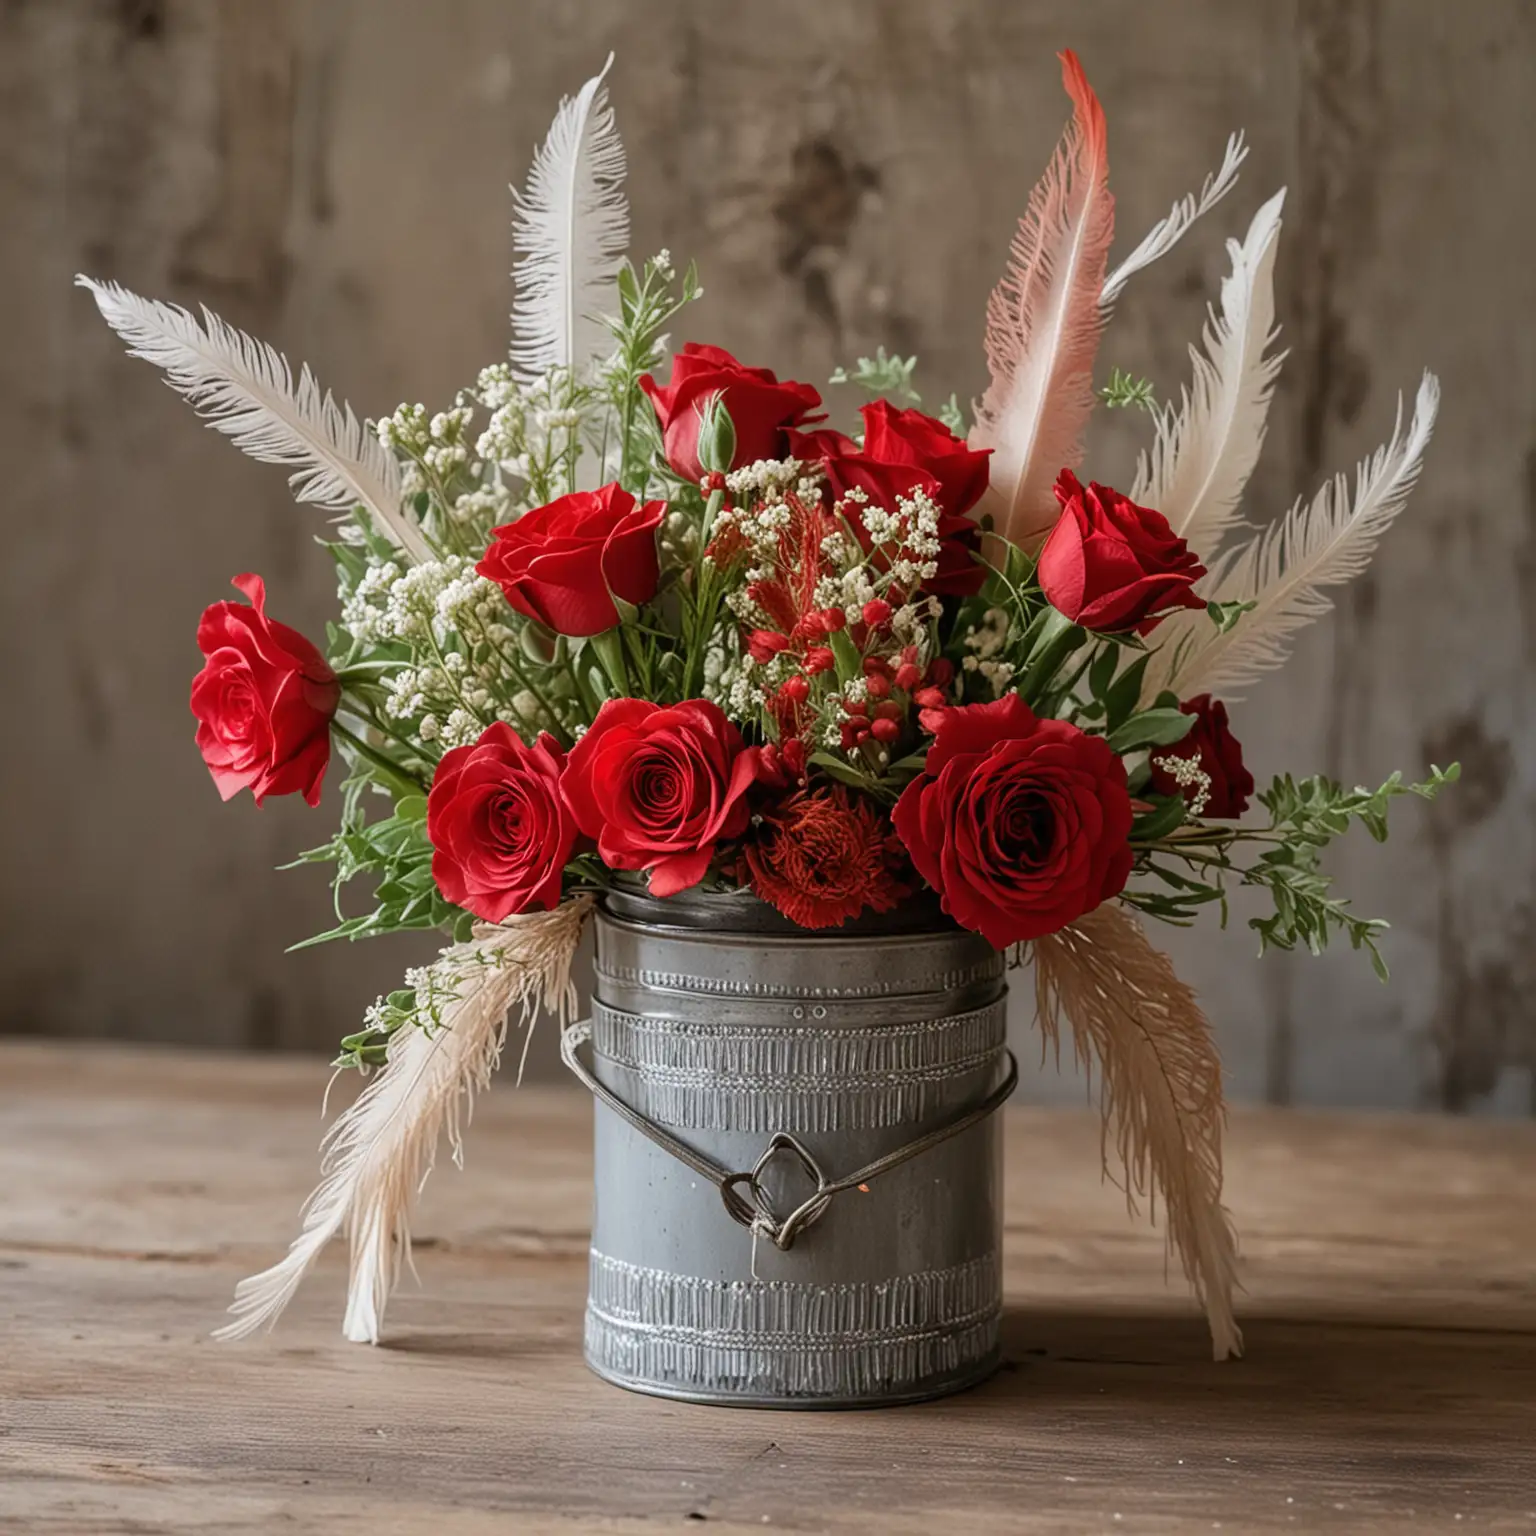 Boho-Wedding-Centerpiece-Fringe-Embellished-Tin-Can-Vase-with-Red-Roses-and-Wildflowers